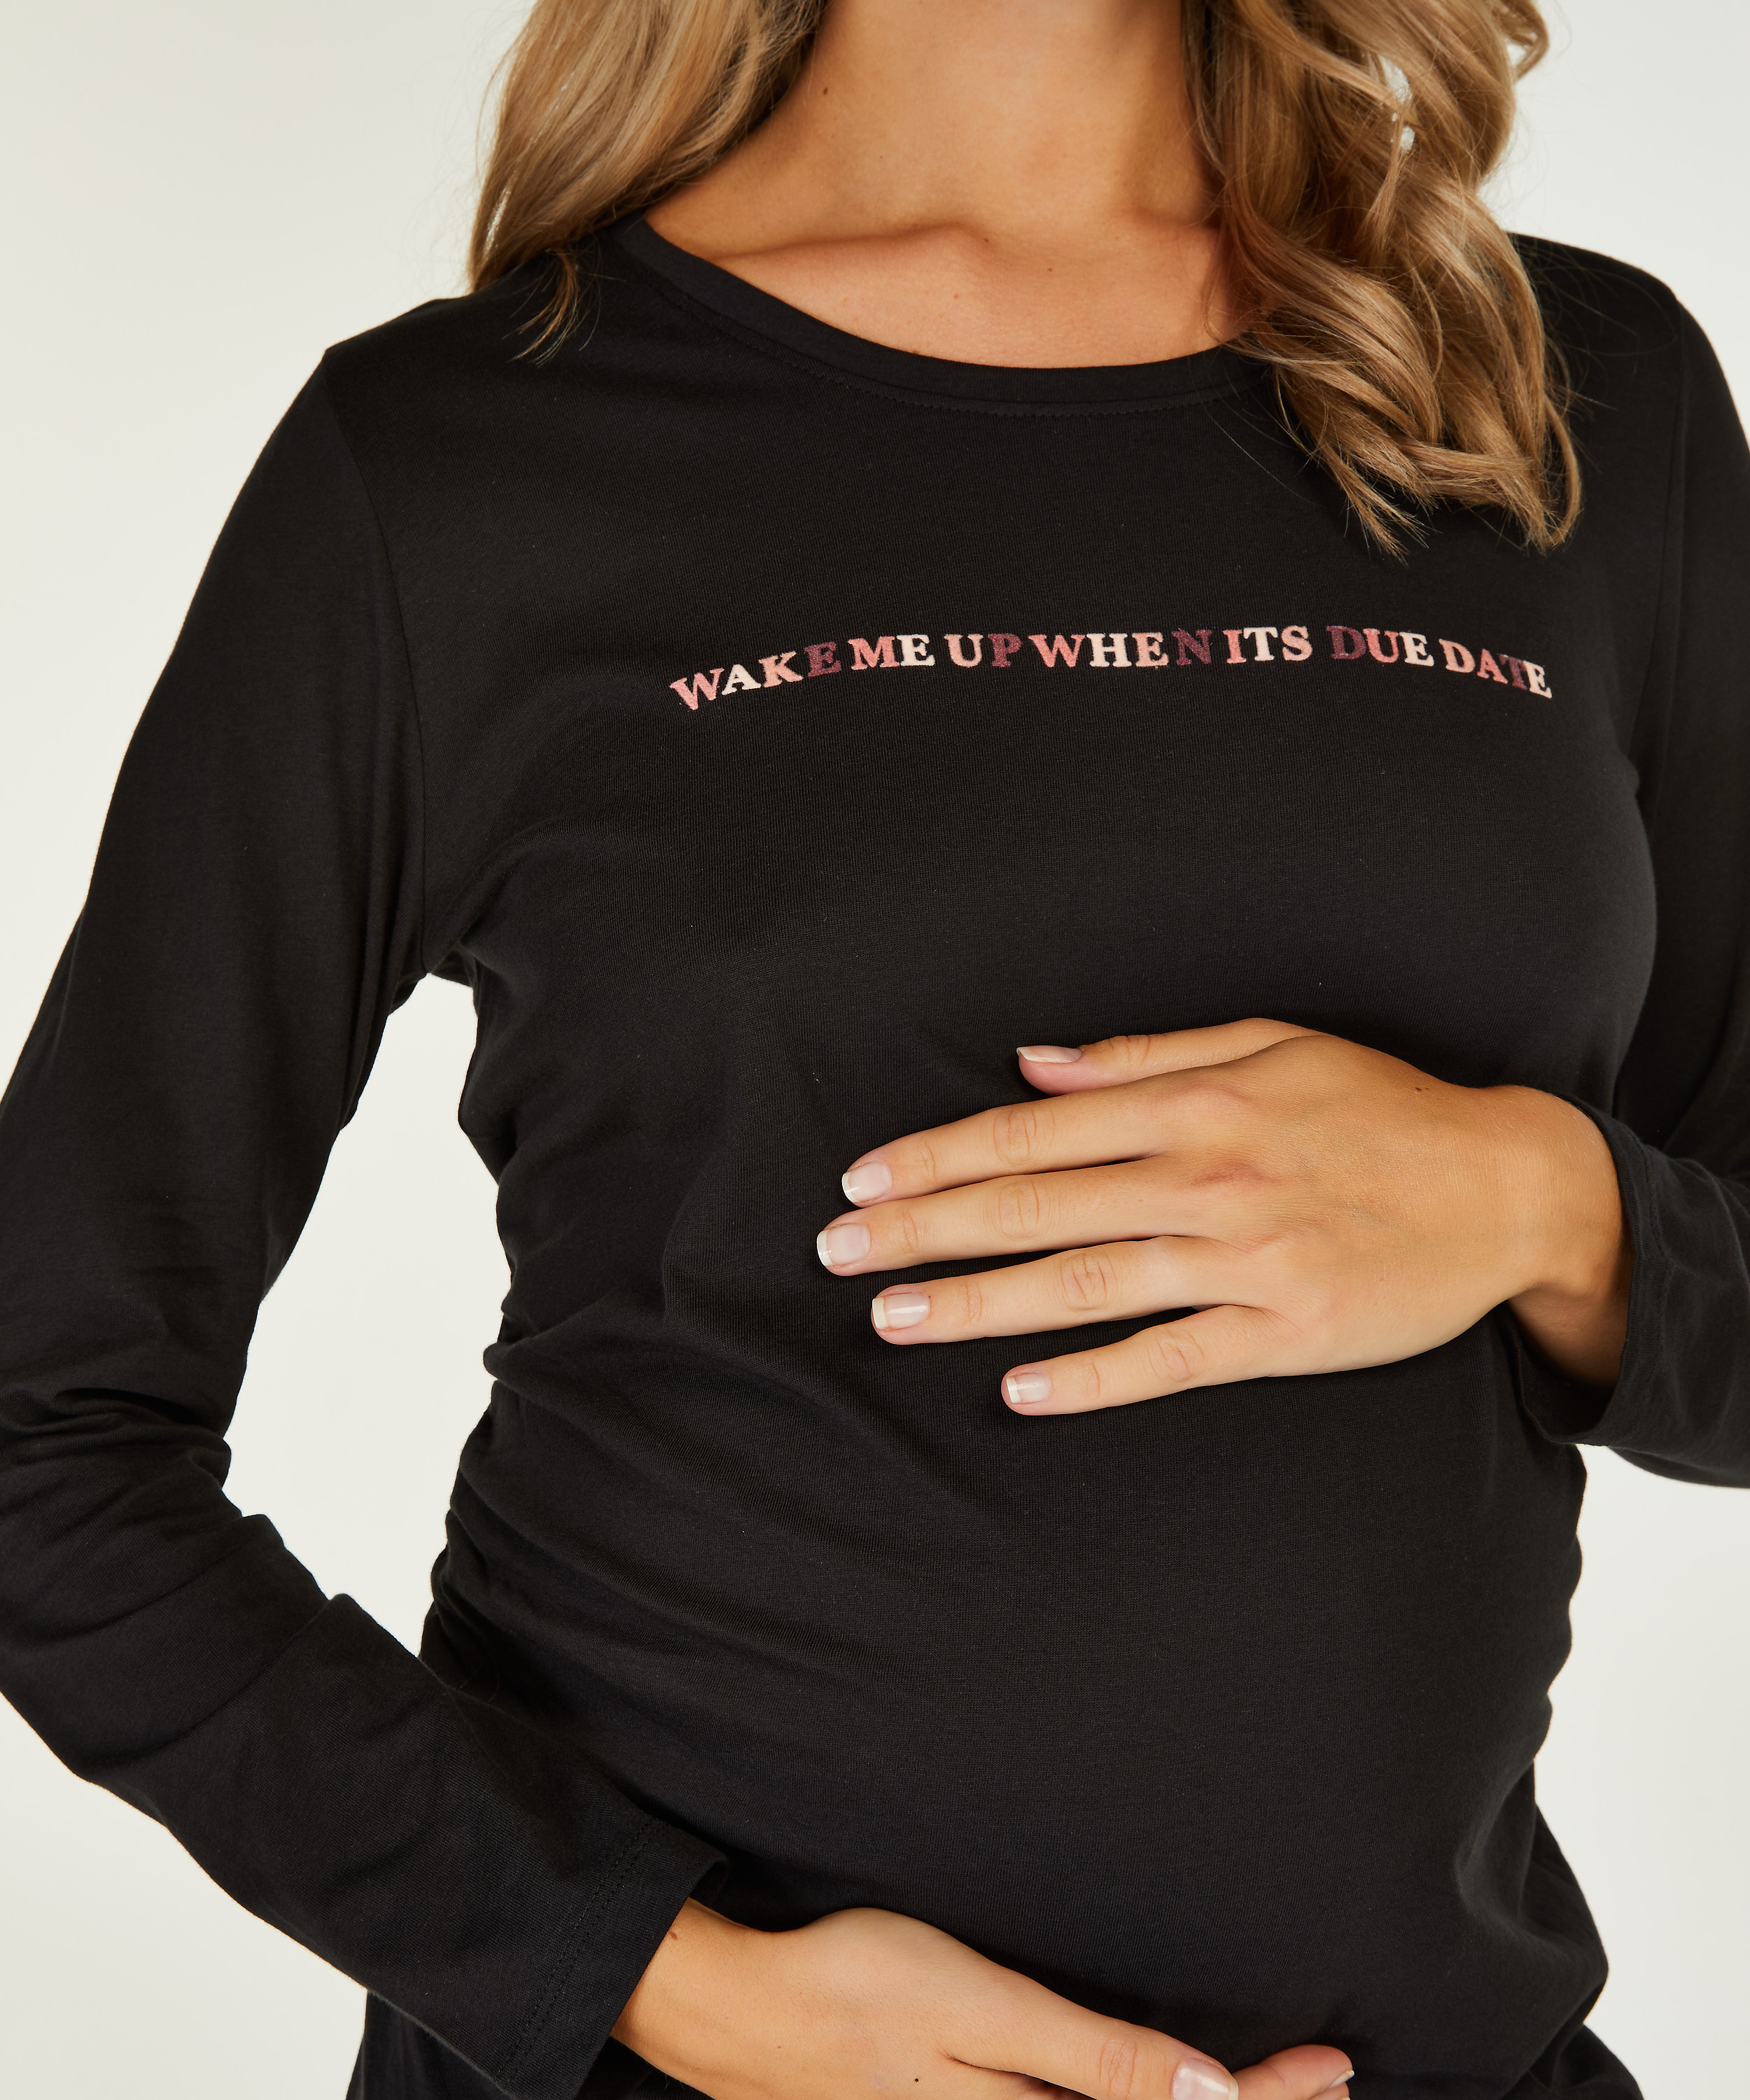 Maternity Long-Sleeved Nightshirt, Black, main